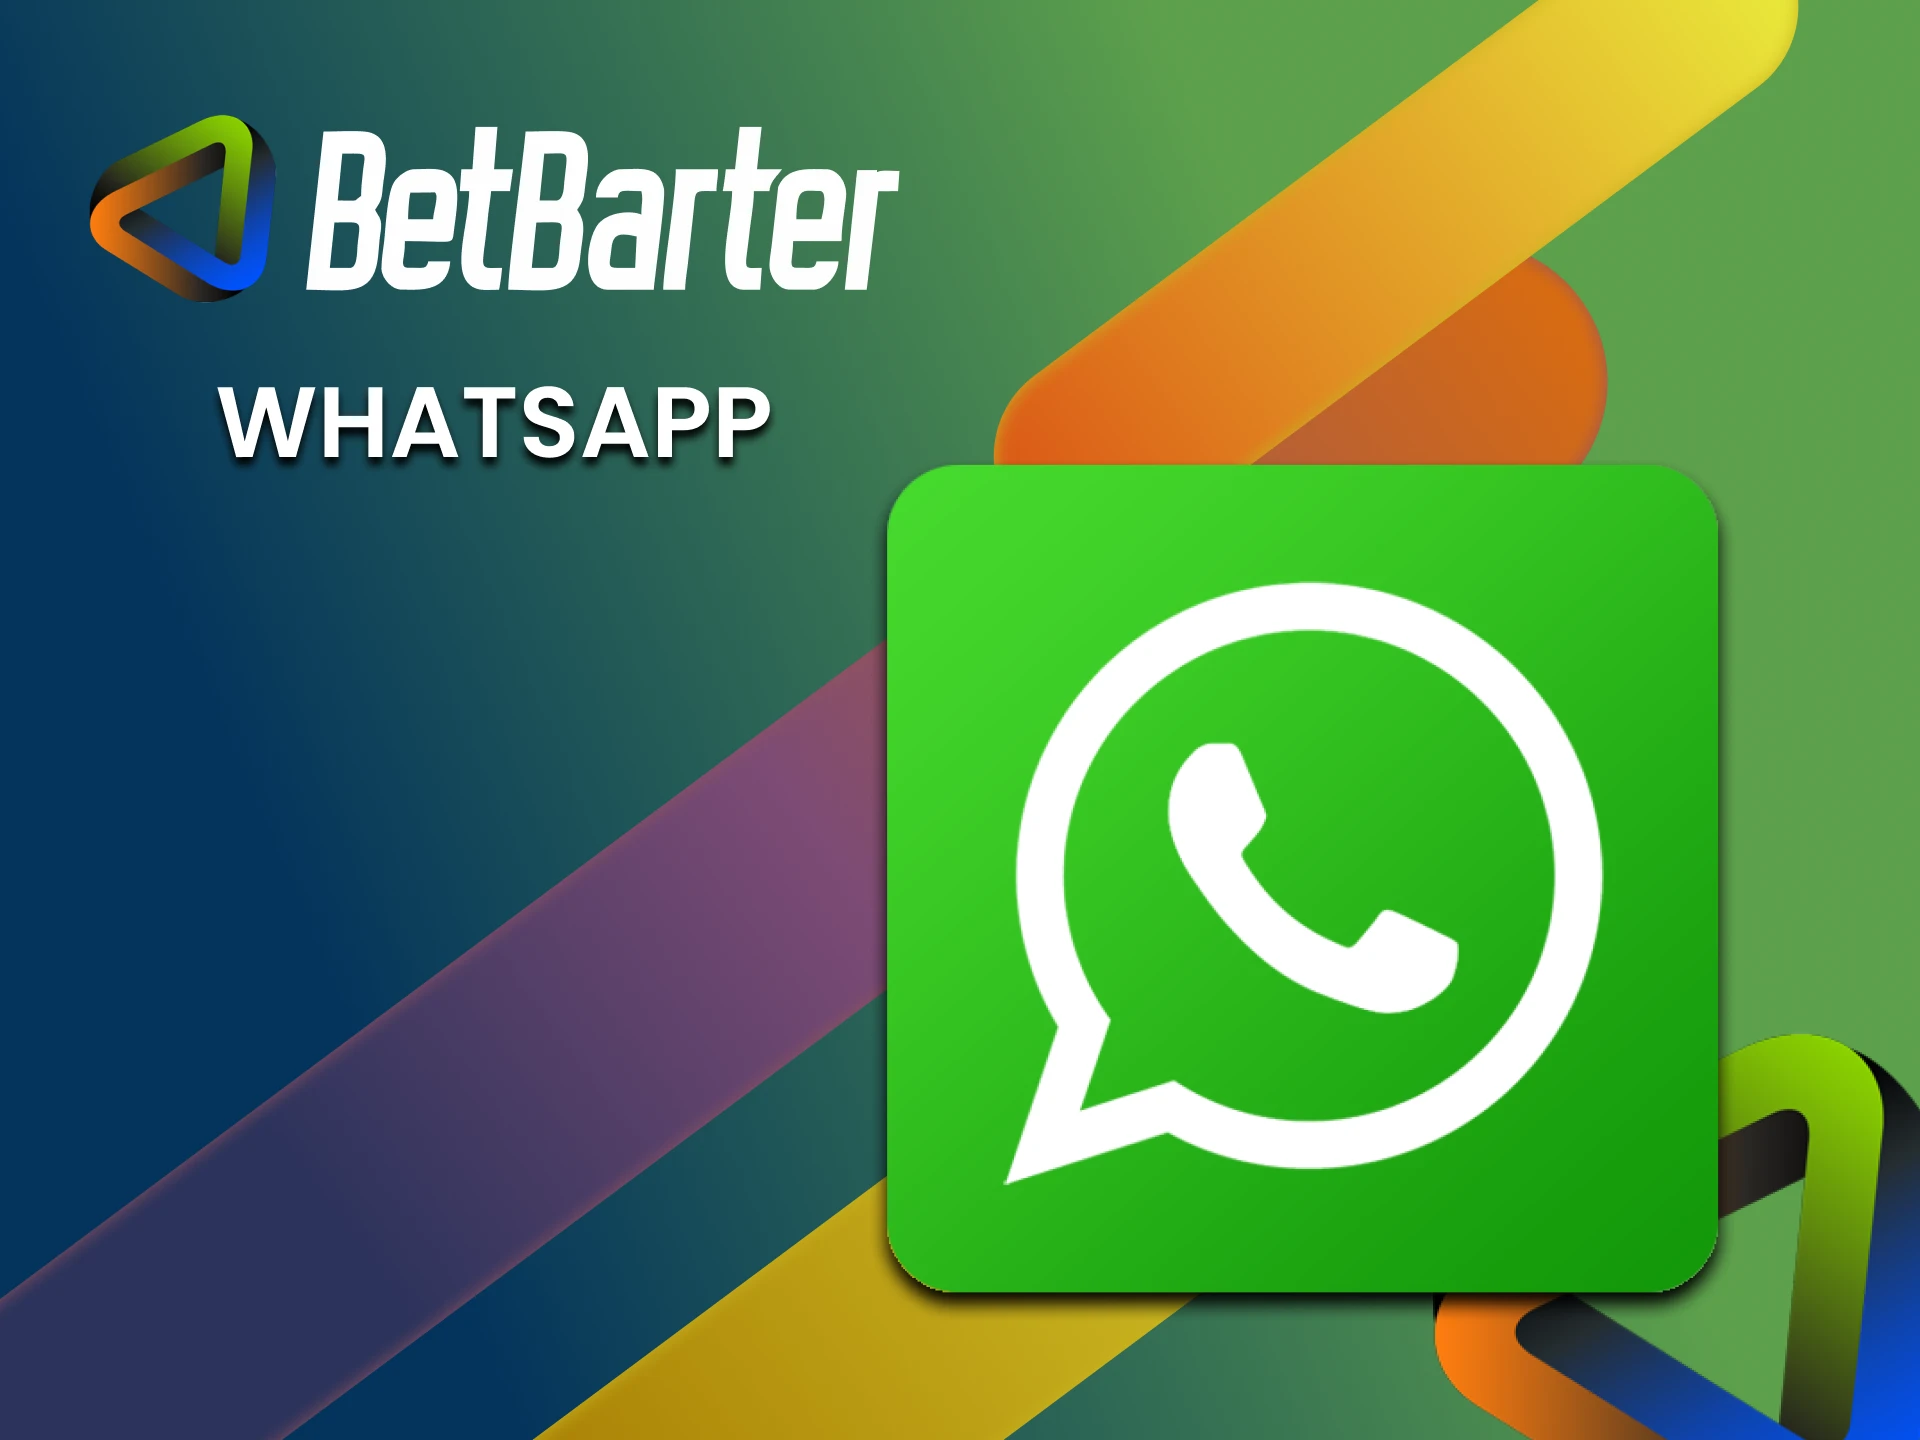 You can contact the BetBarter team via whatsapp.